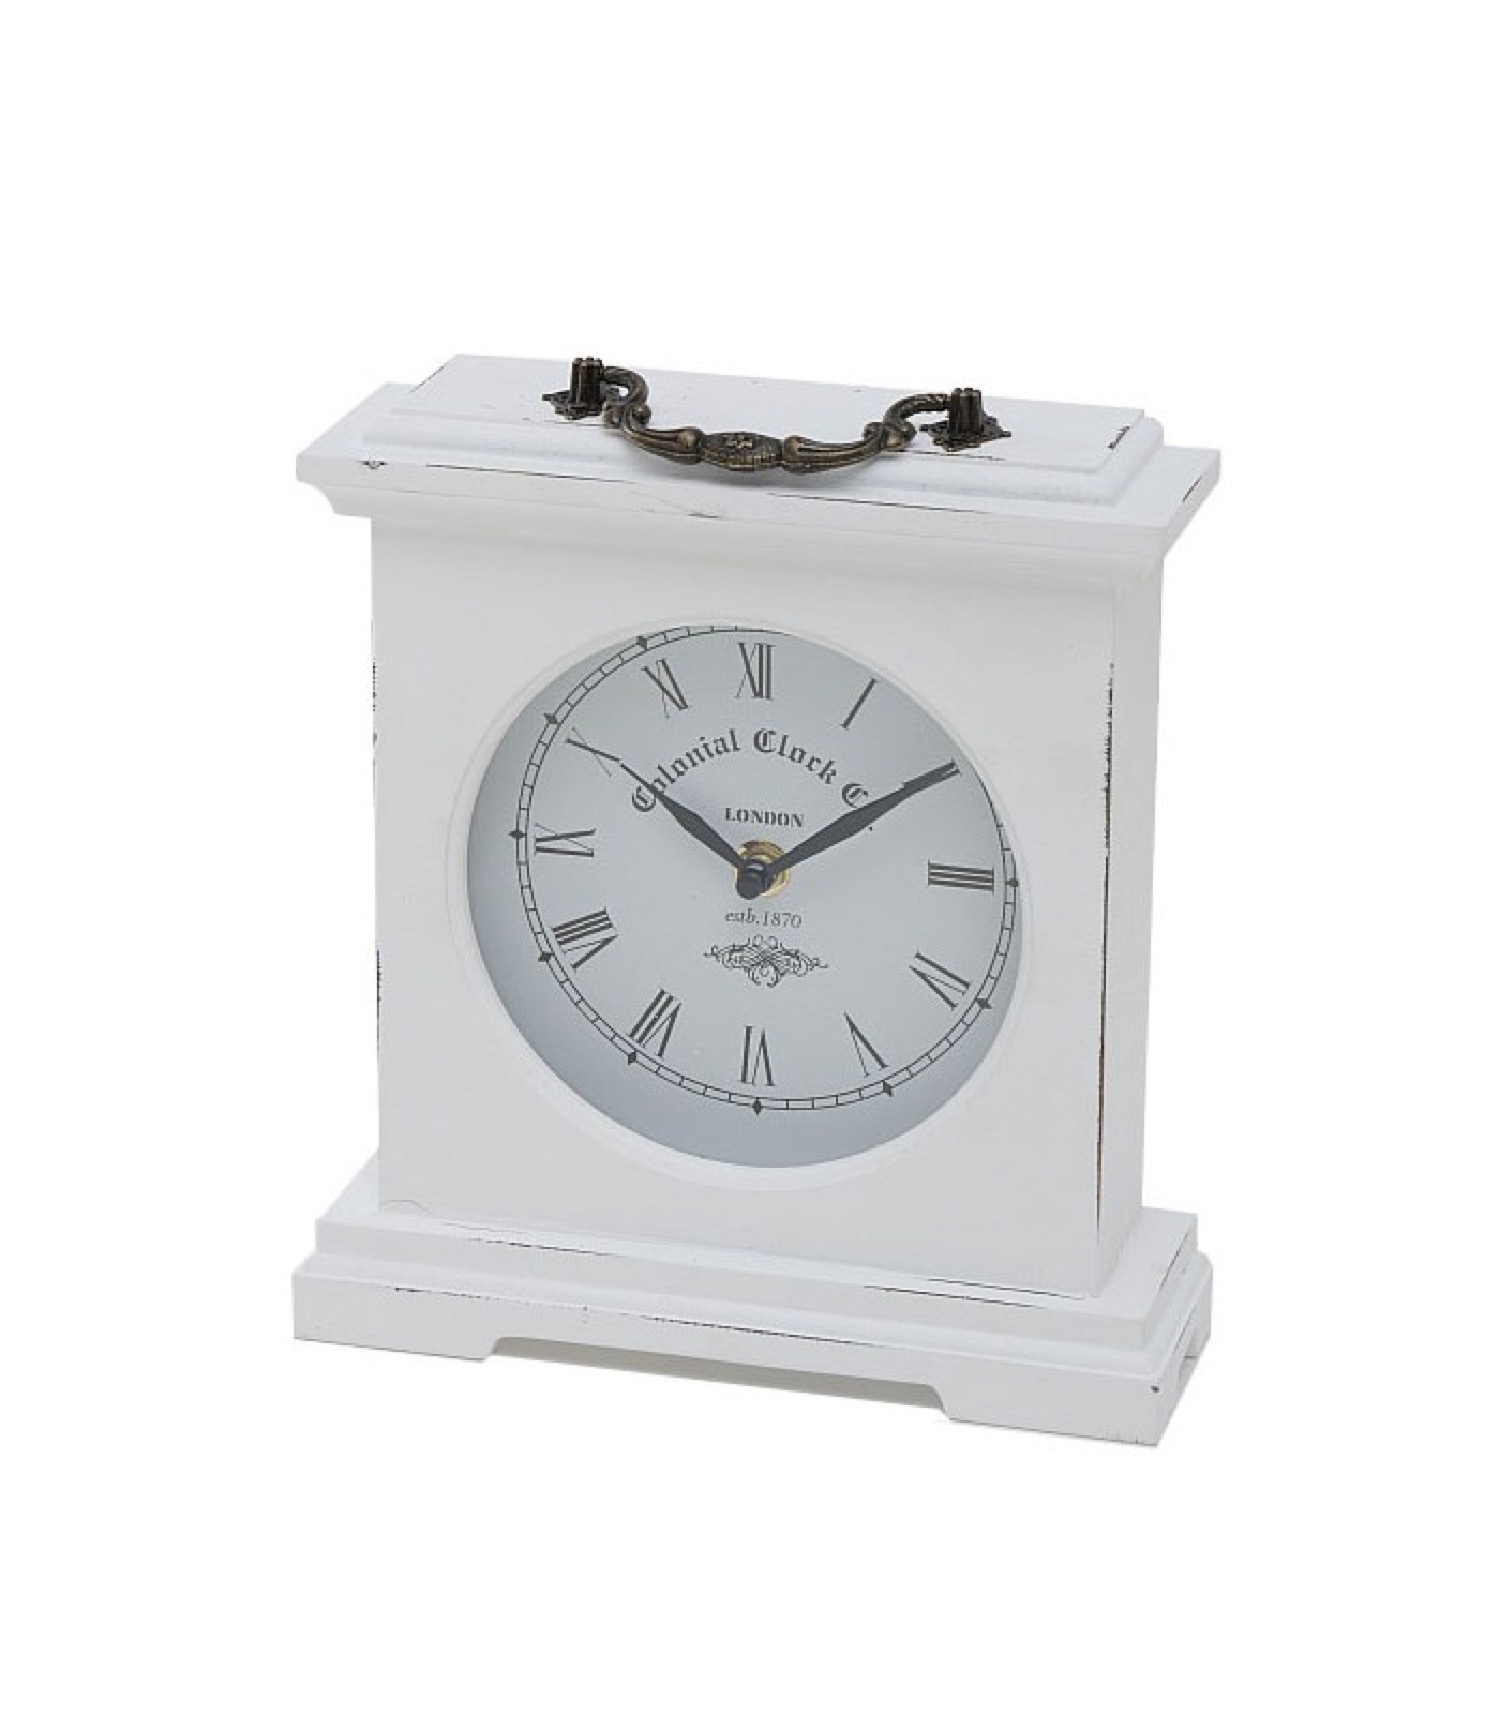 Horloge à poser en bois blanc H24cm